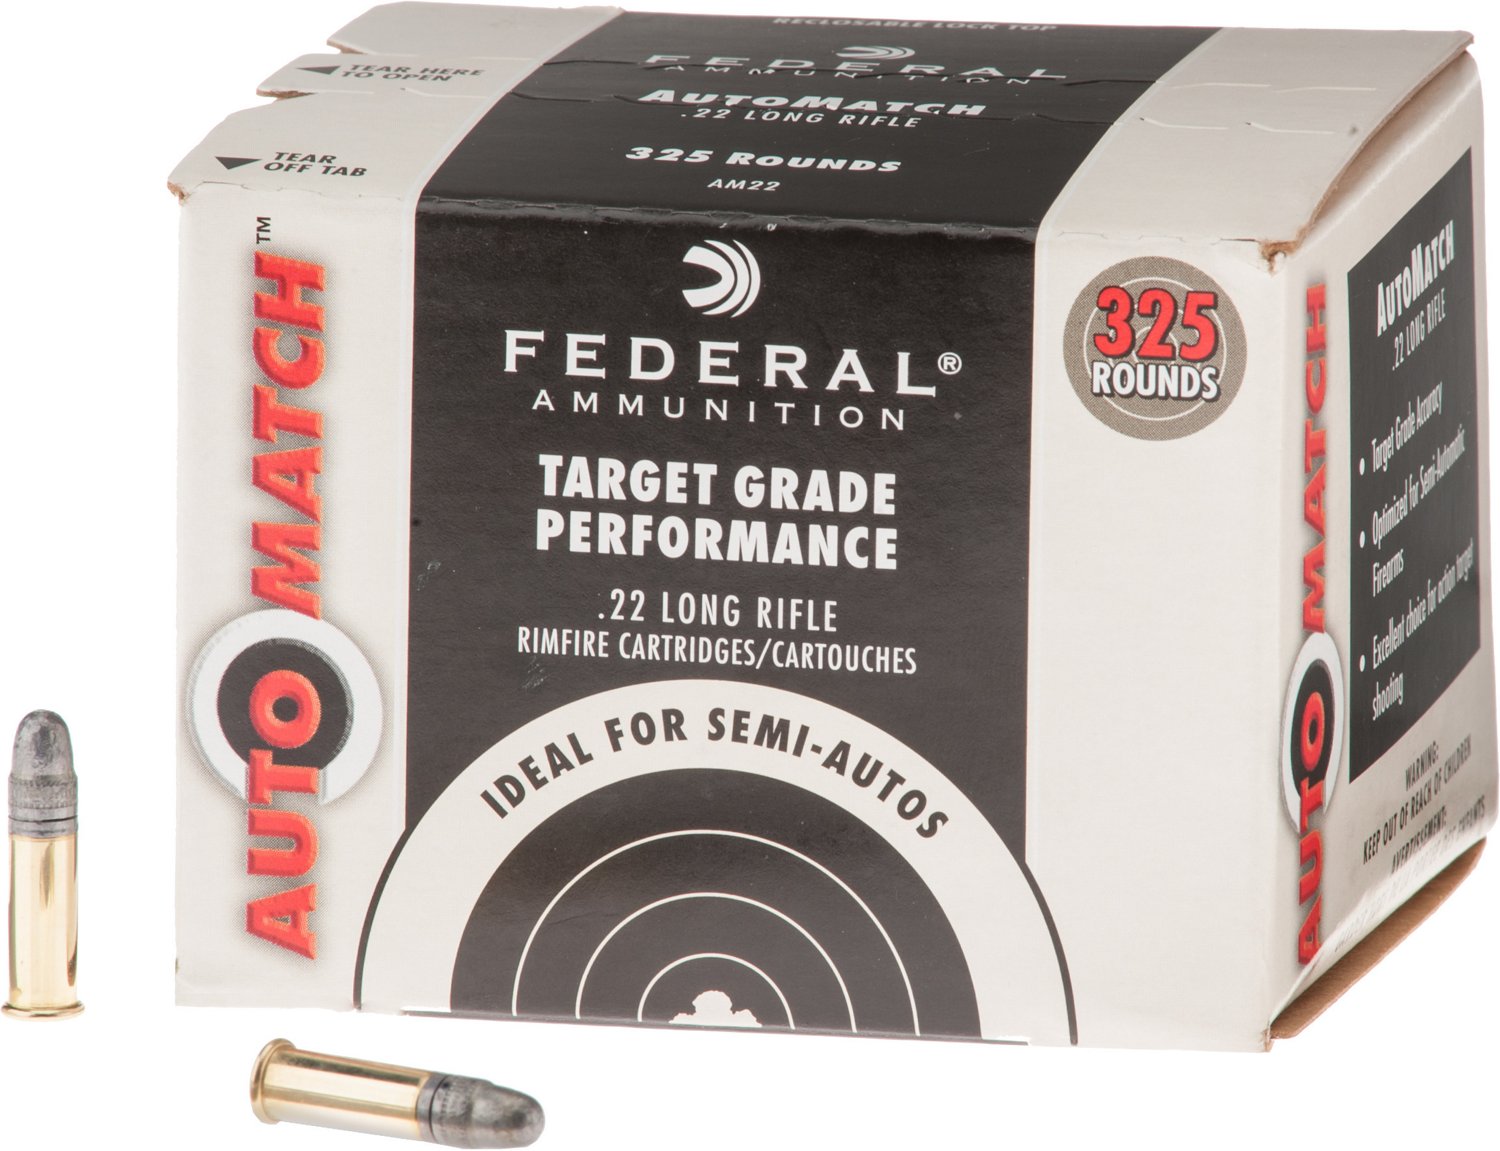 Shop Federal Ammunition Products Online